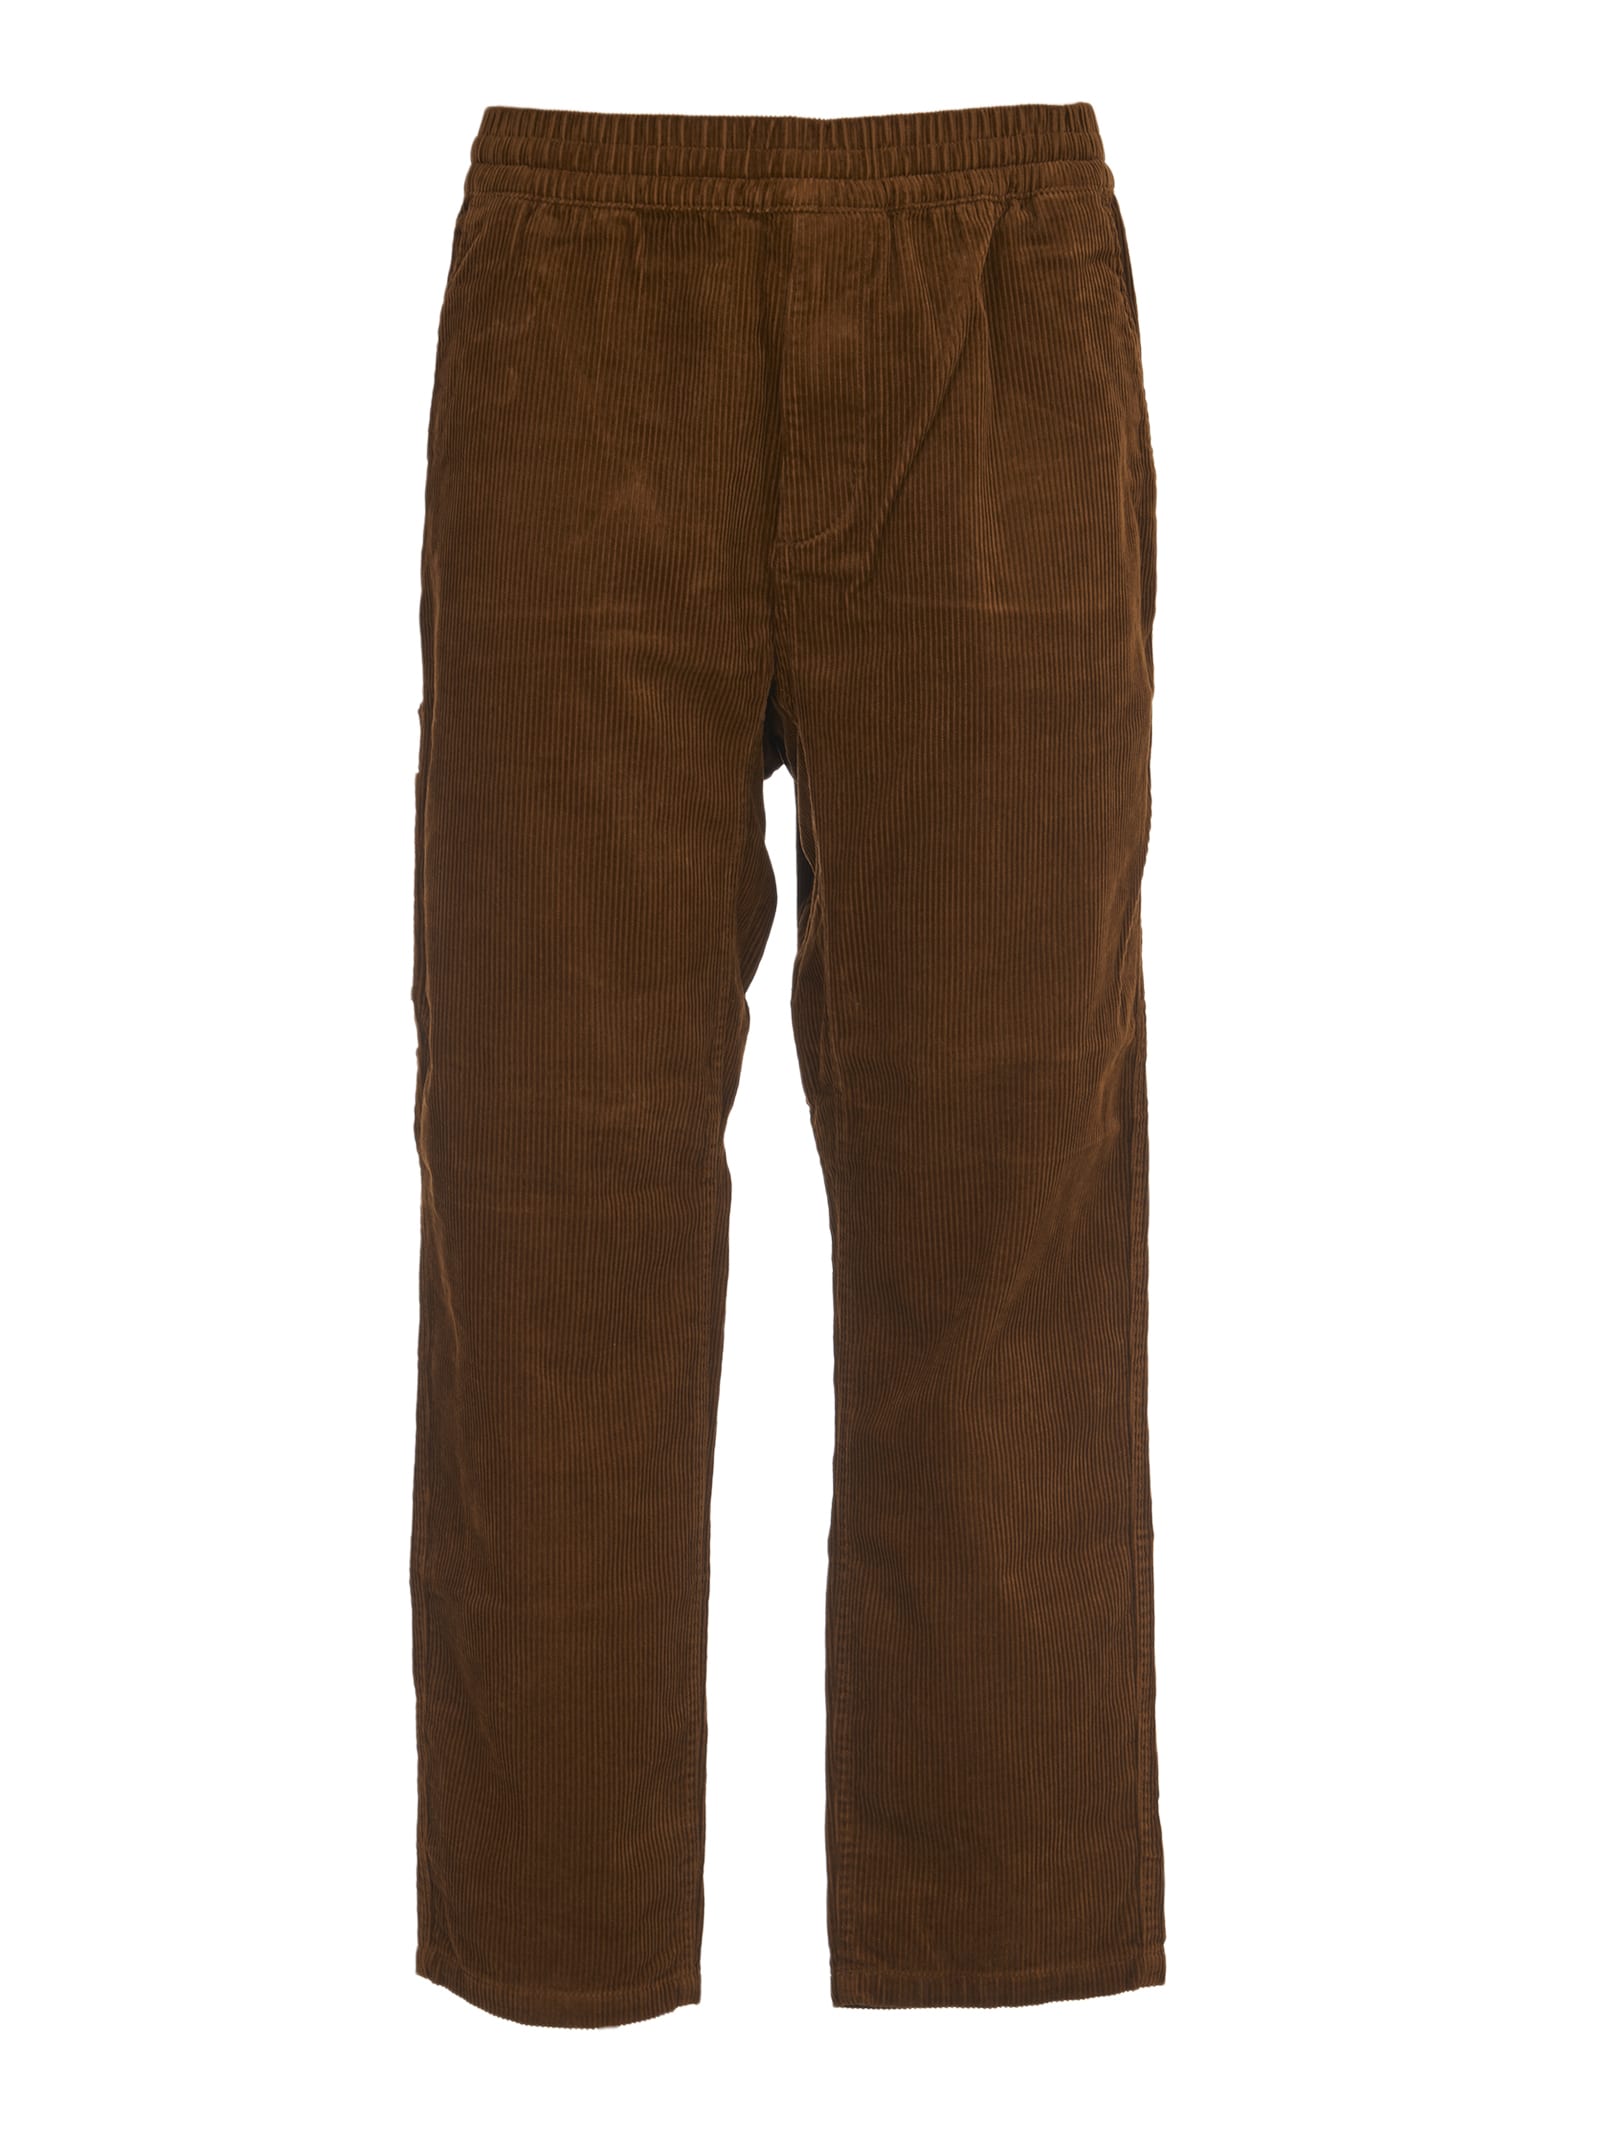 Carhartt Brown Corduroy Trousers